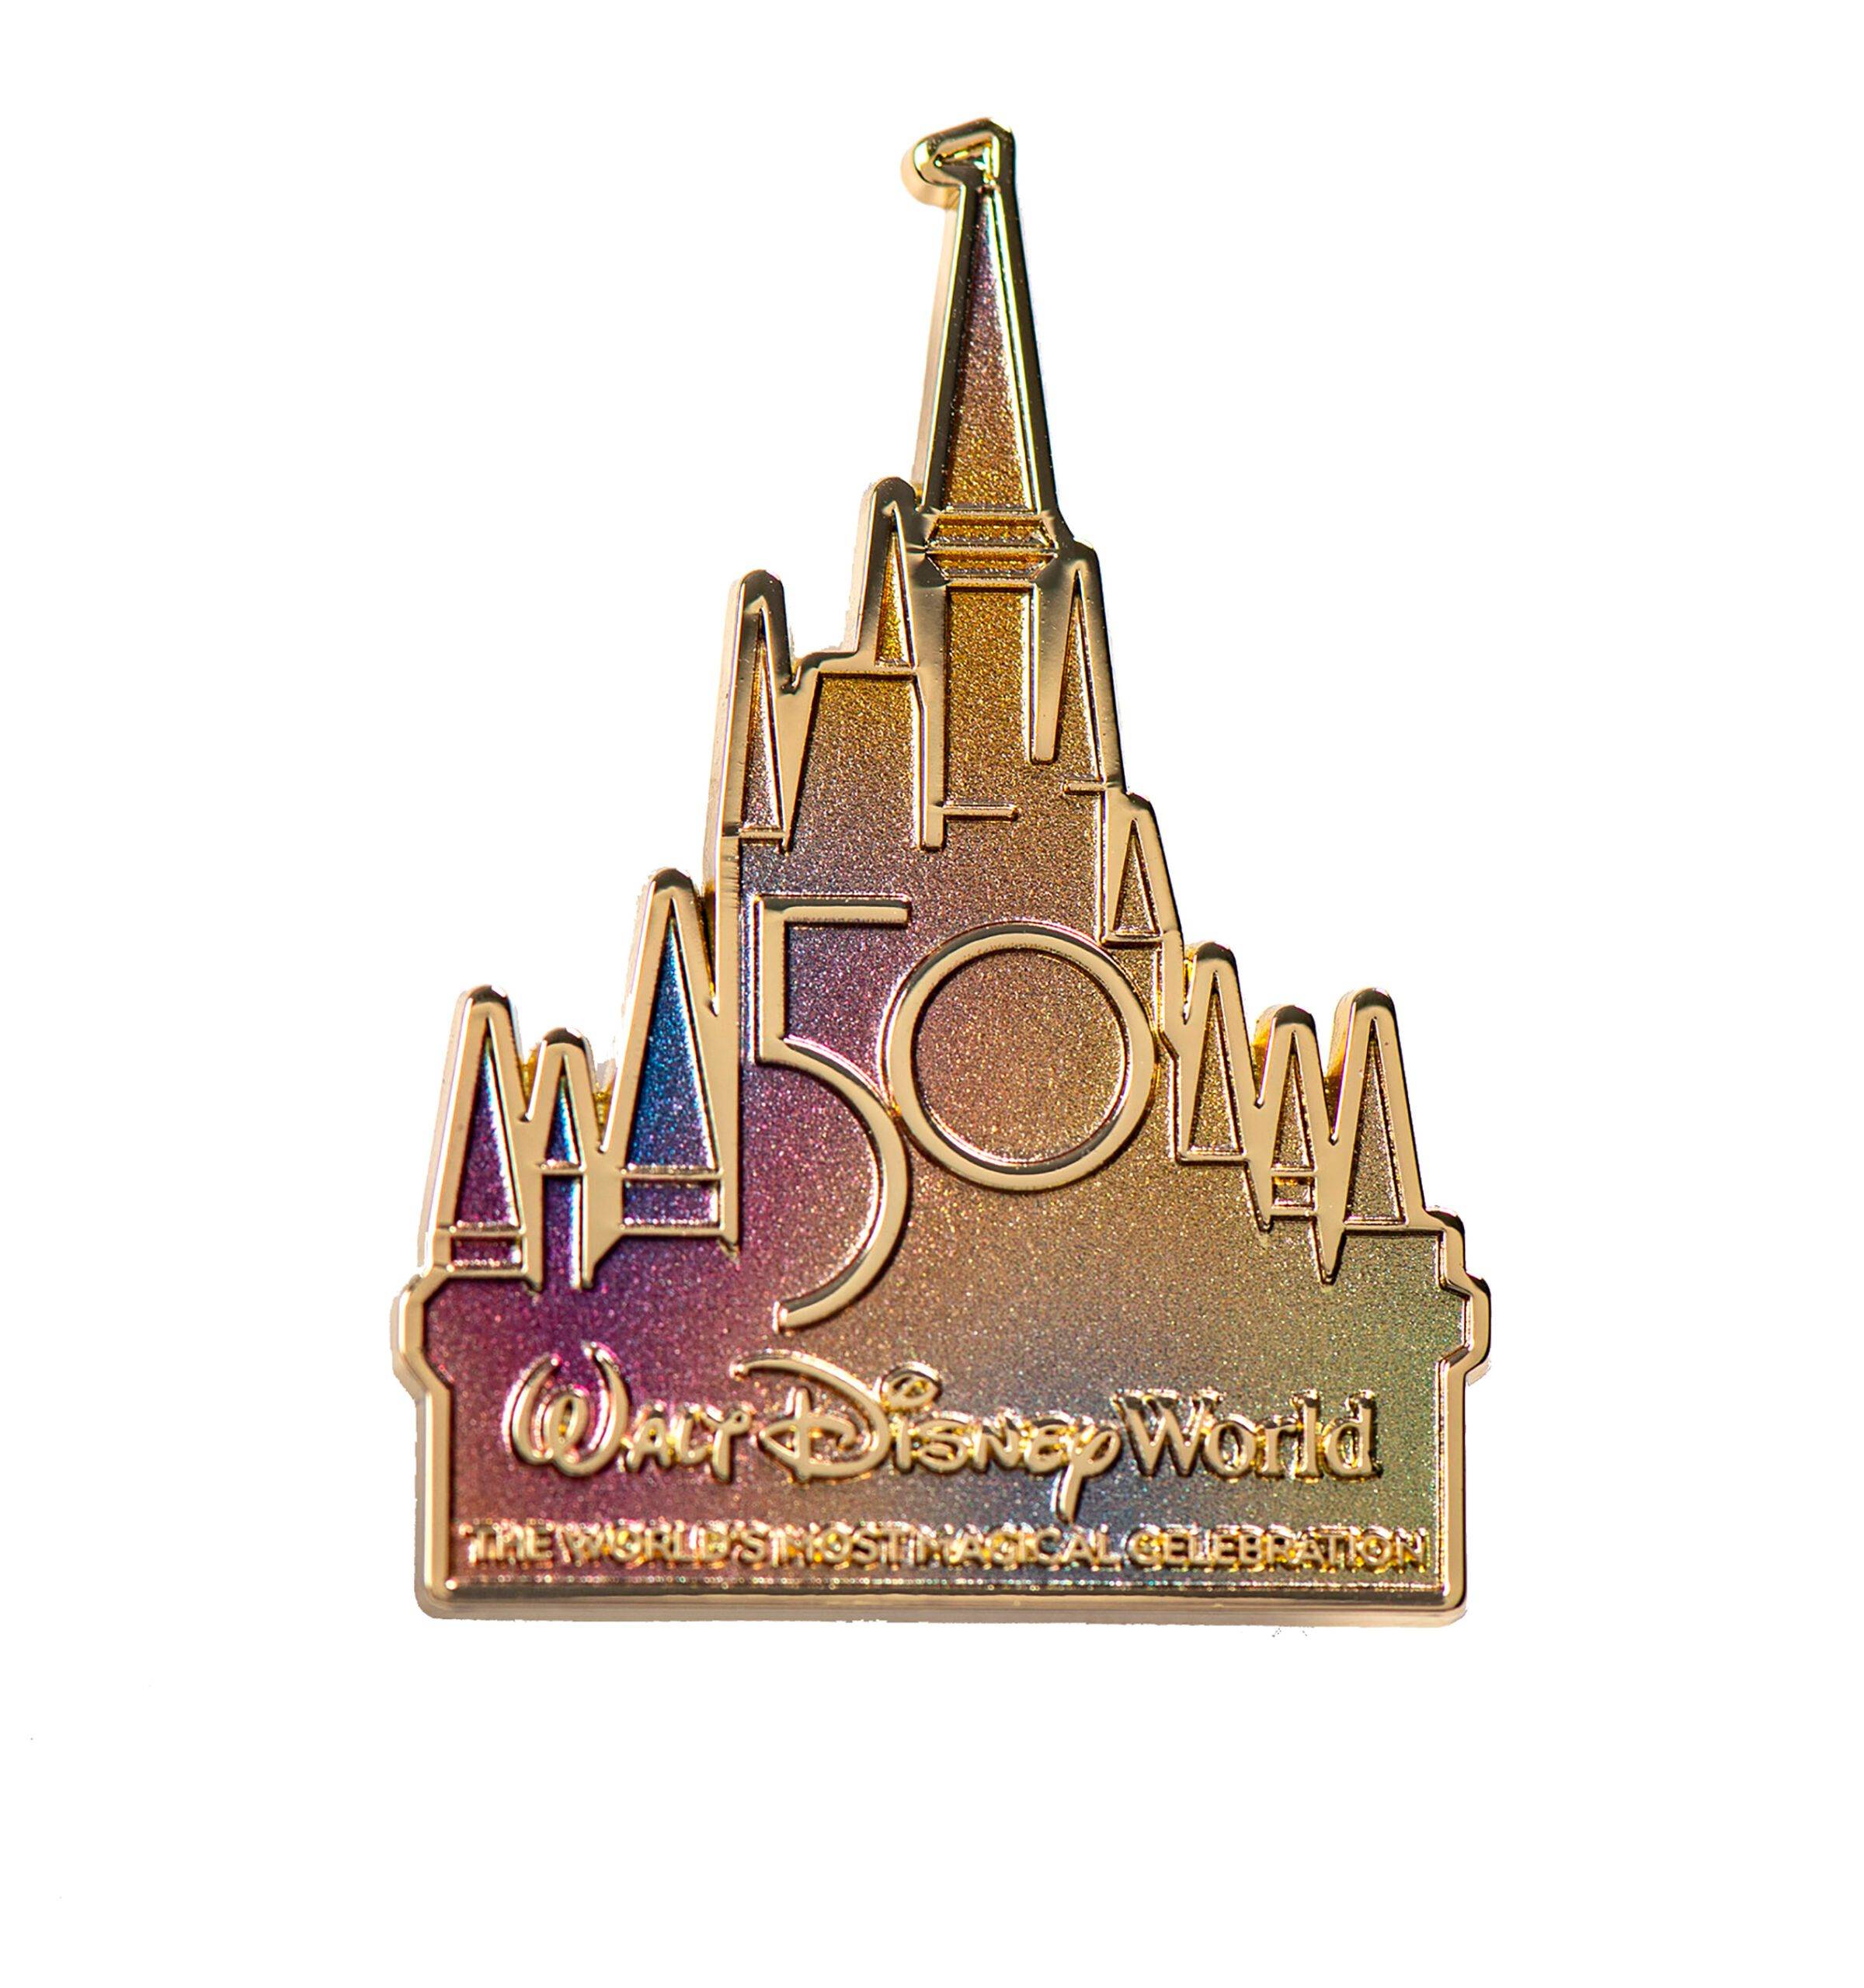 Walt Disney World 50th anniversary merchandise